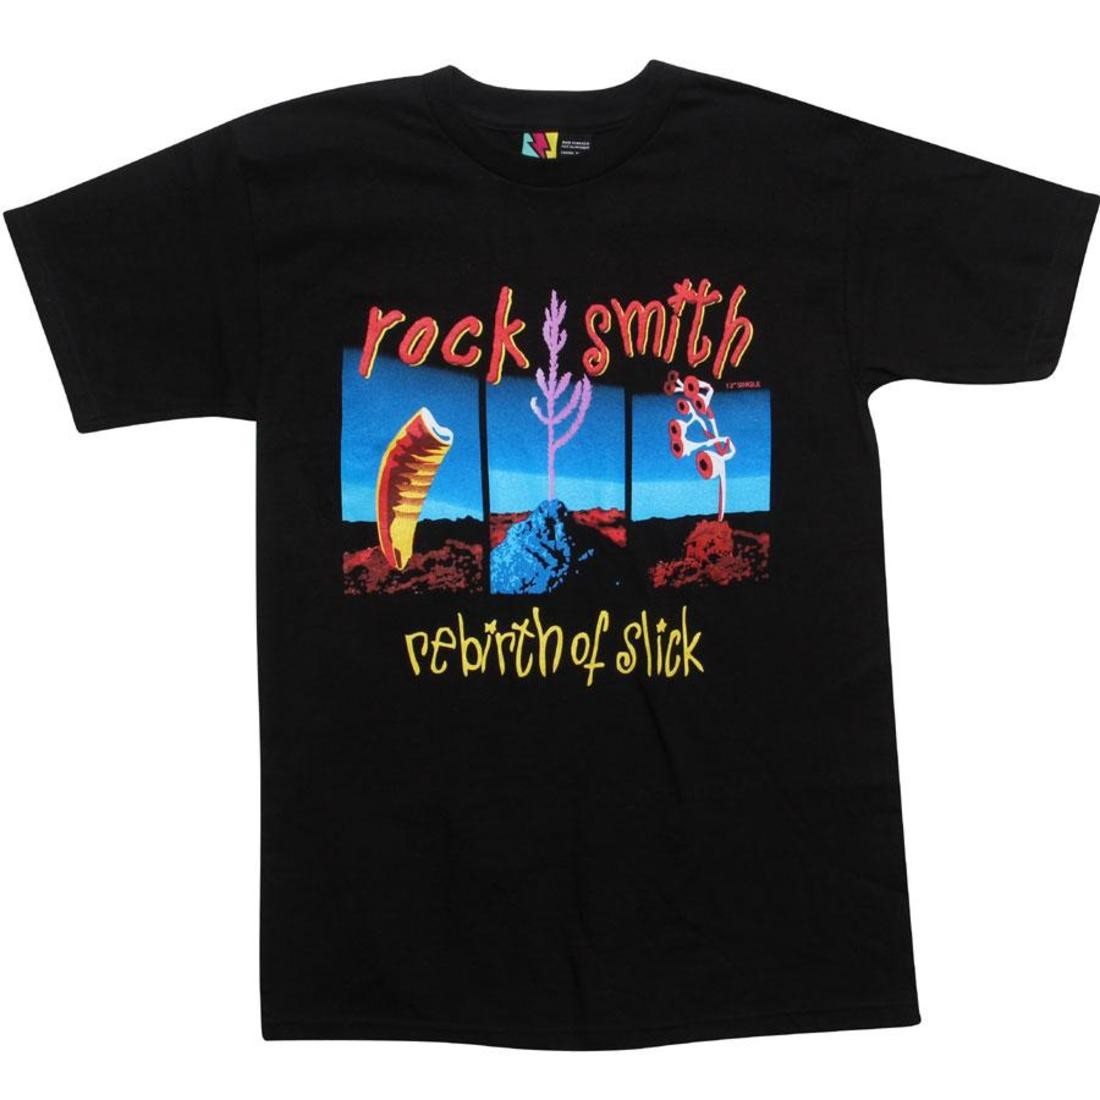 Rock Smith Cool Like Dat Tee (black)